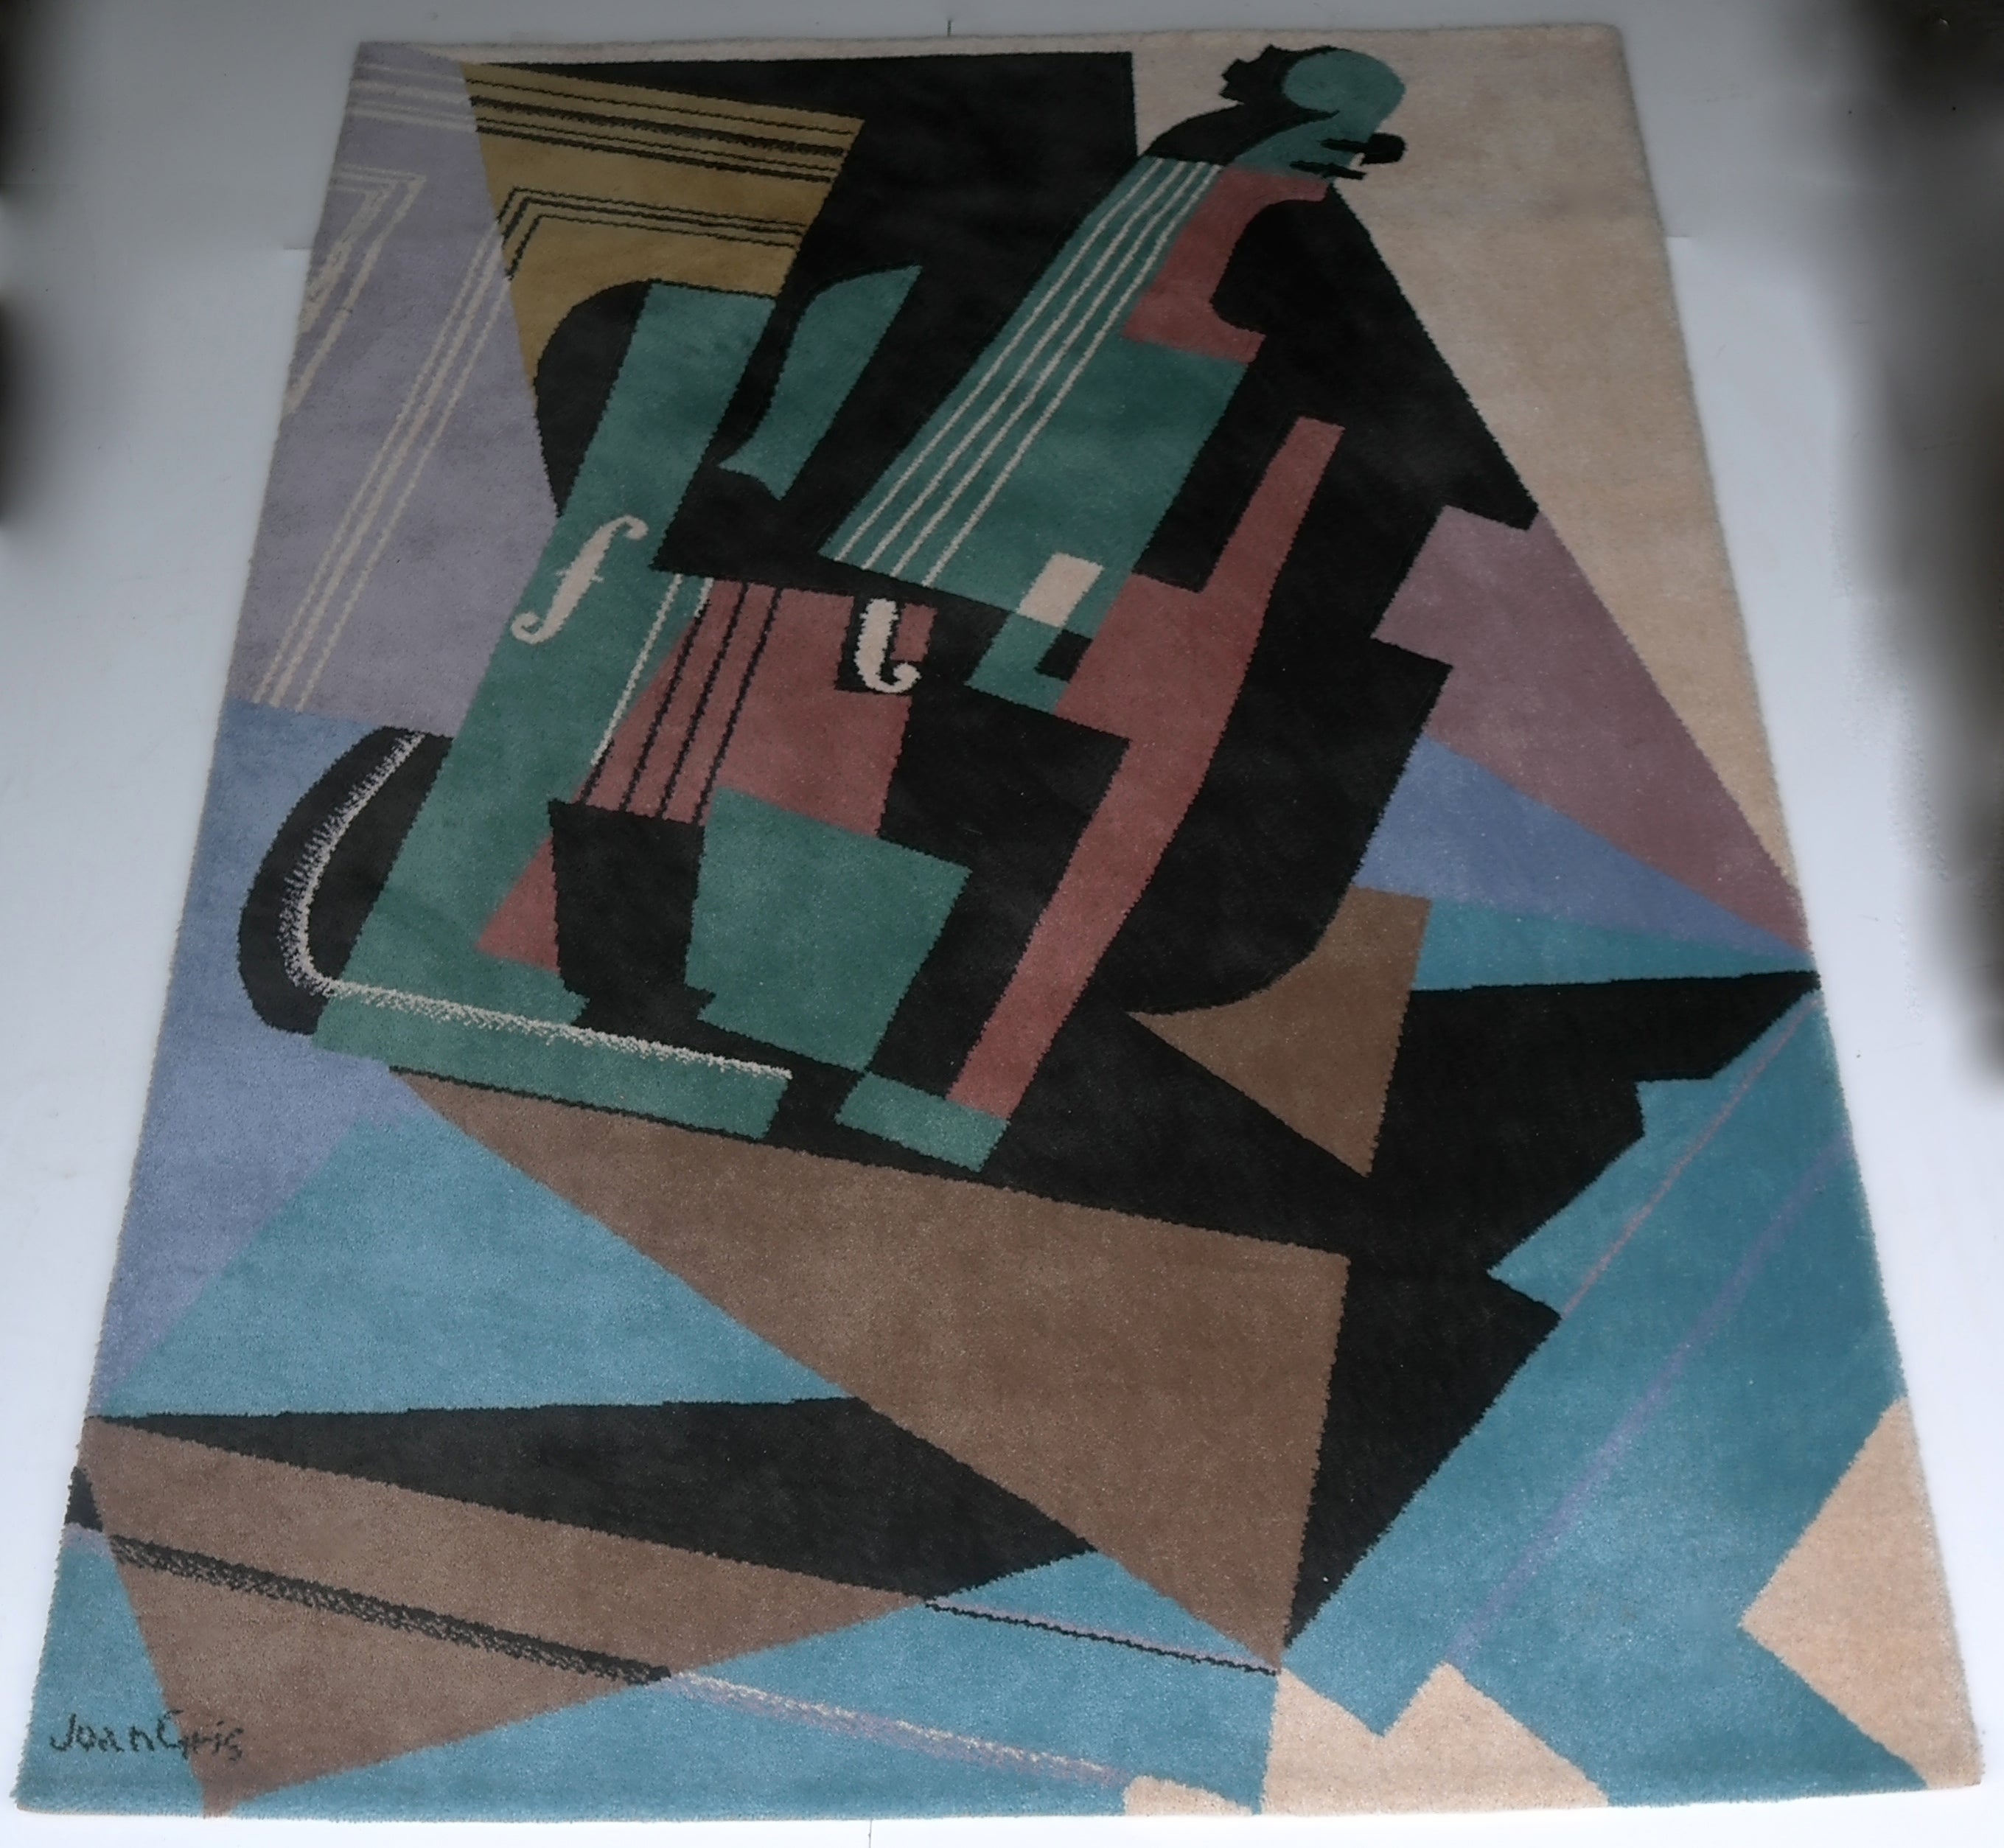 Juan Gris Violin Cubist design art Carpet by Ege Axminster A/S art line Denmark